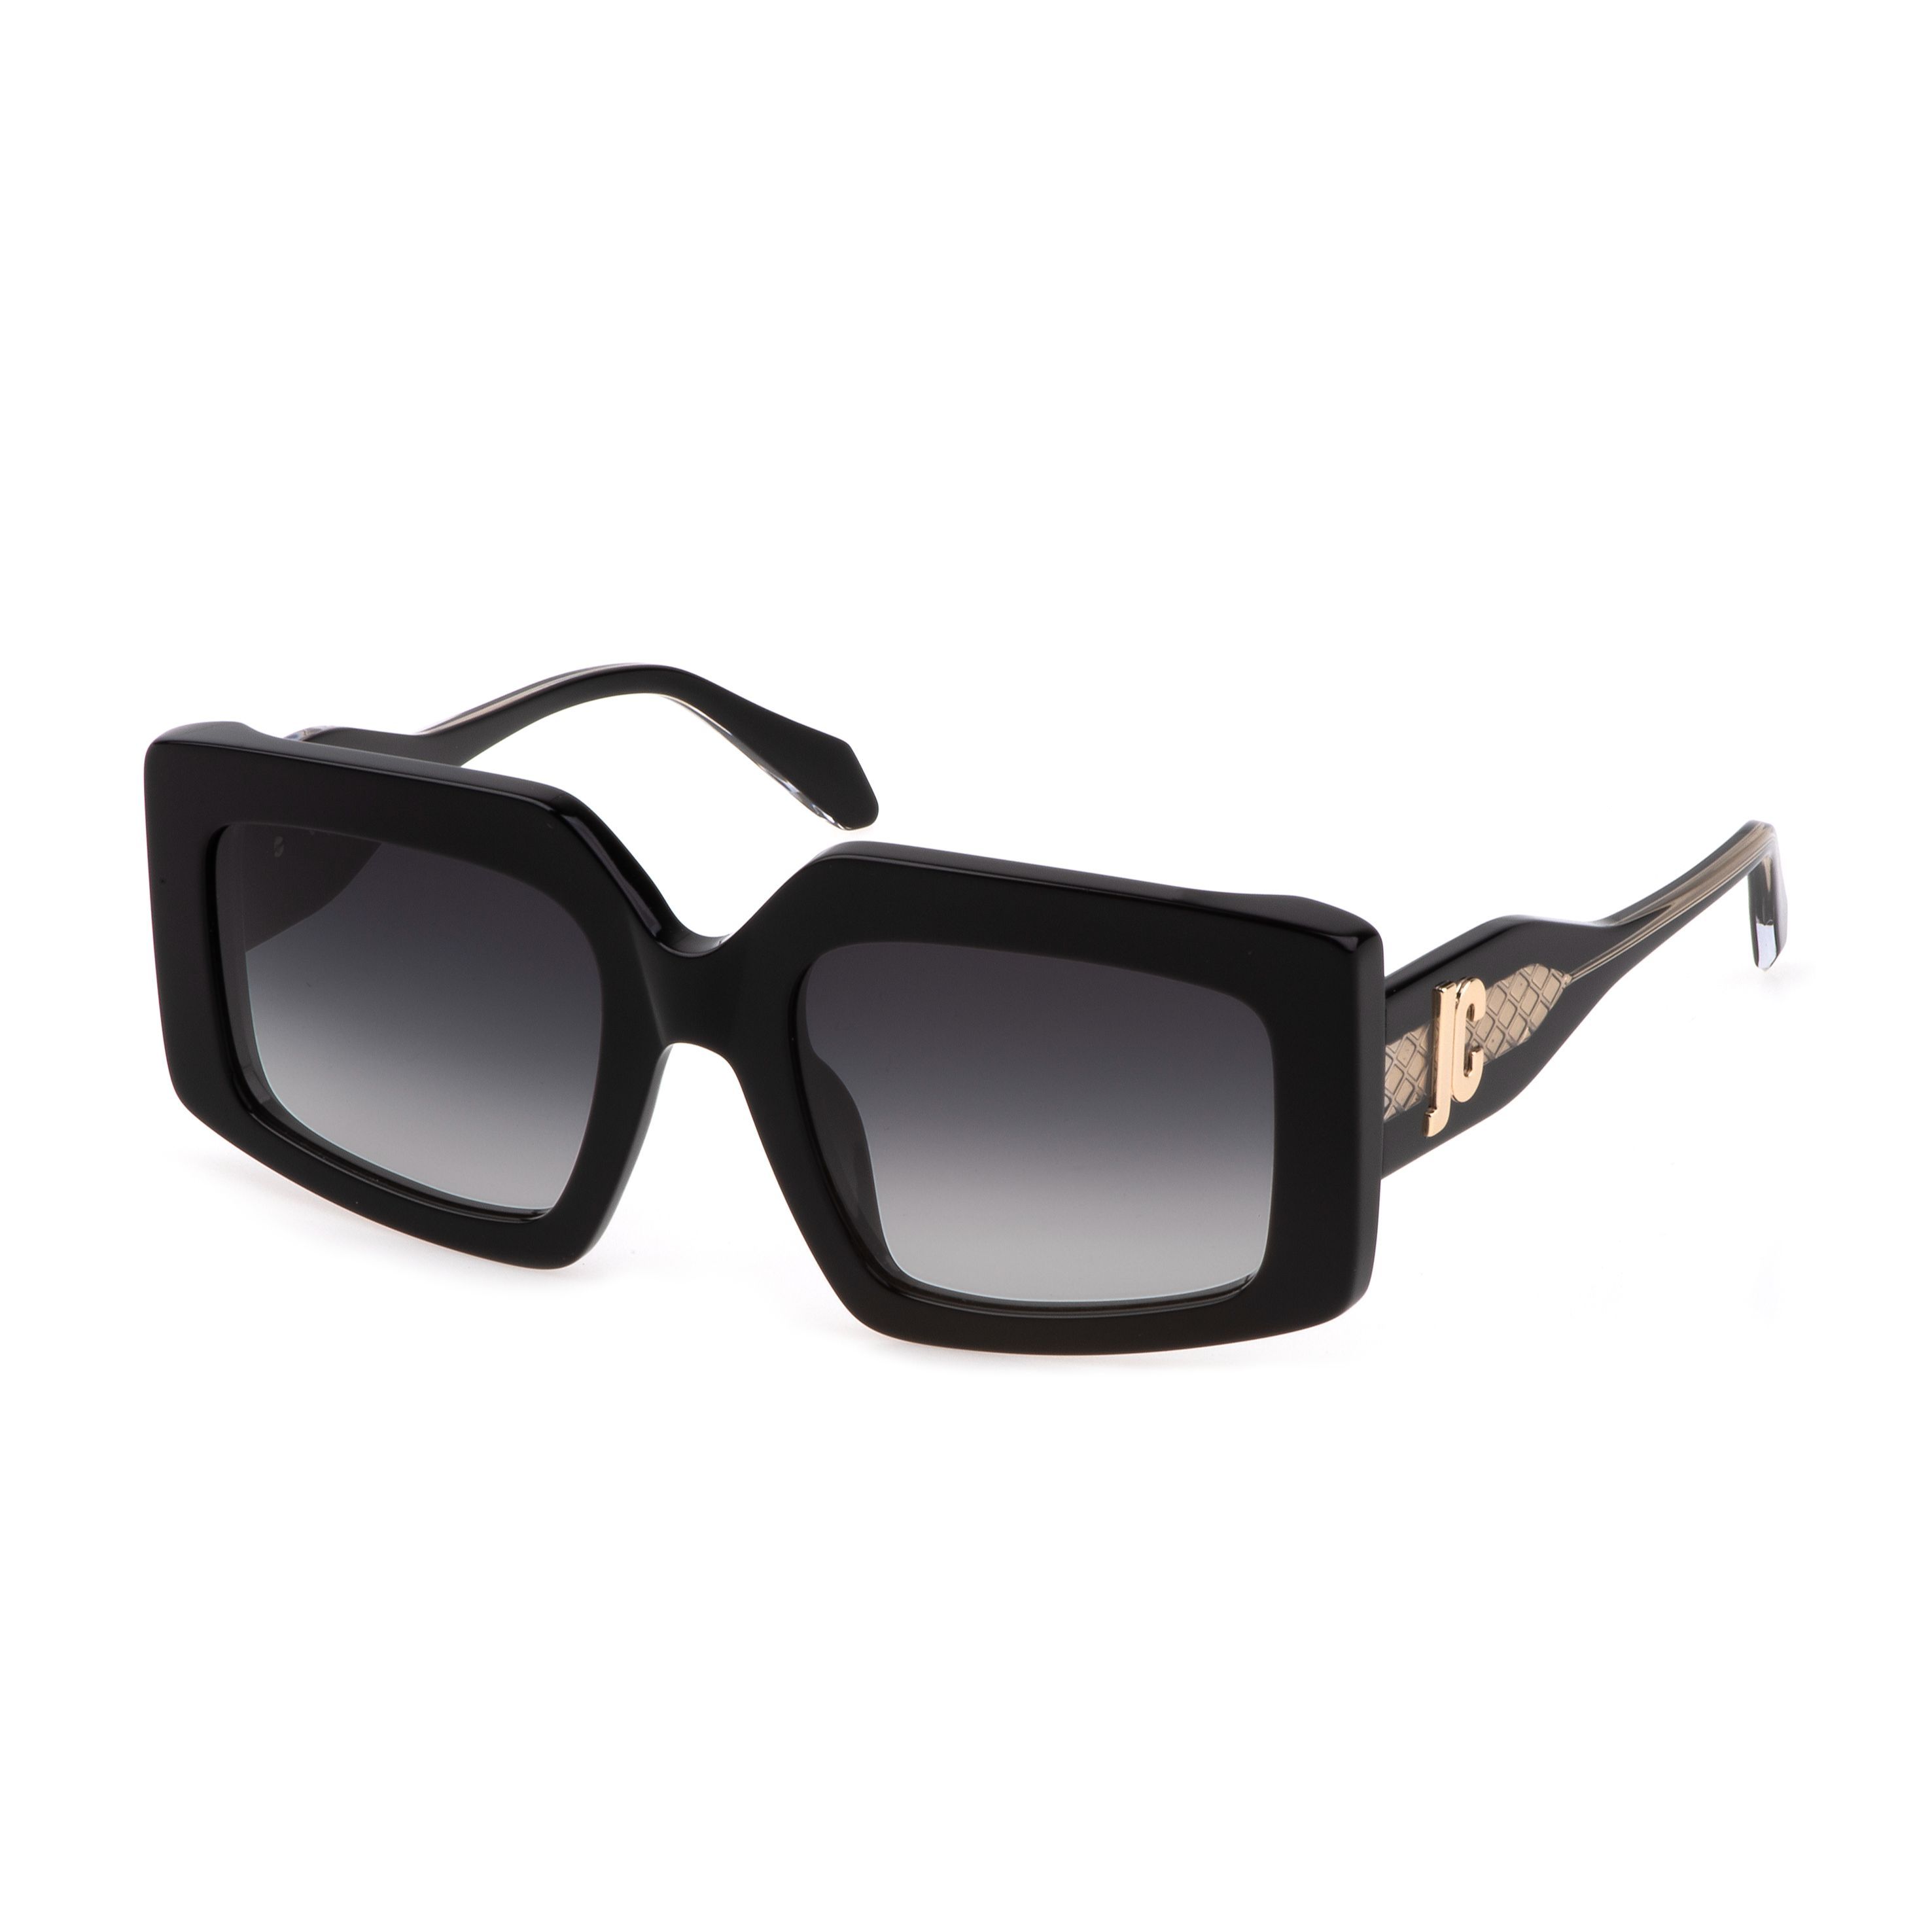 SJC020V Rectangle Sunglasses 700 - size 54